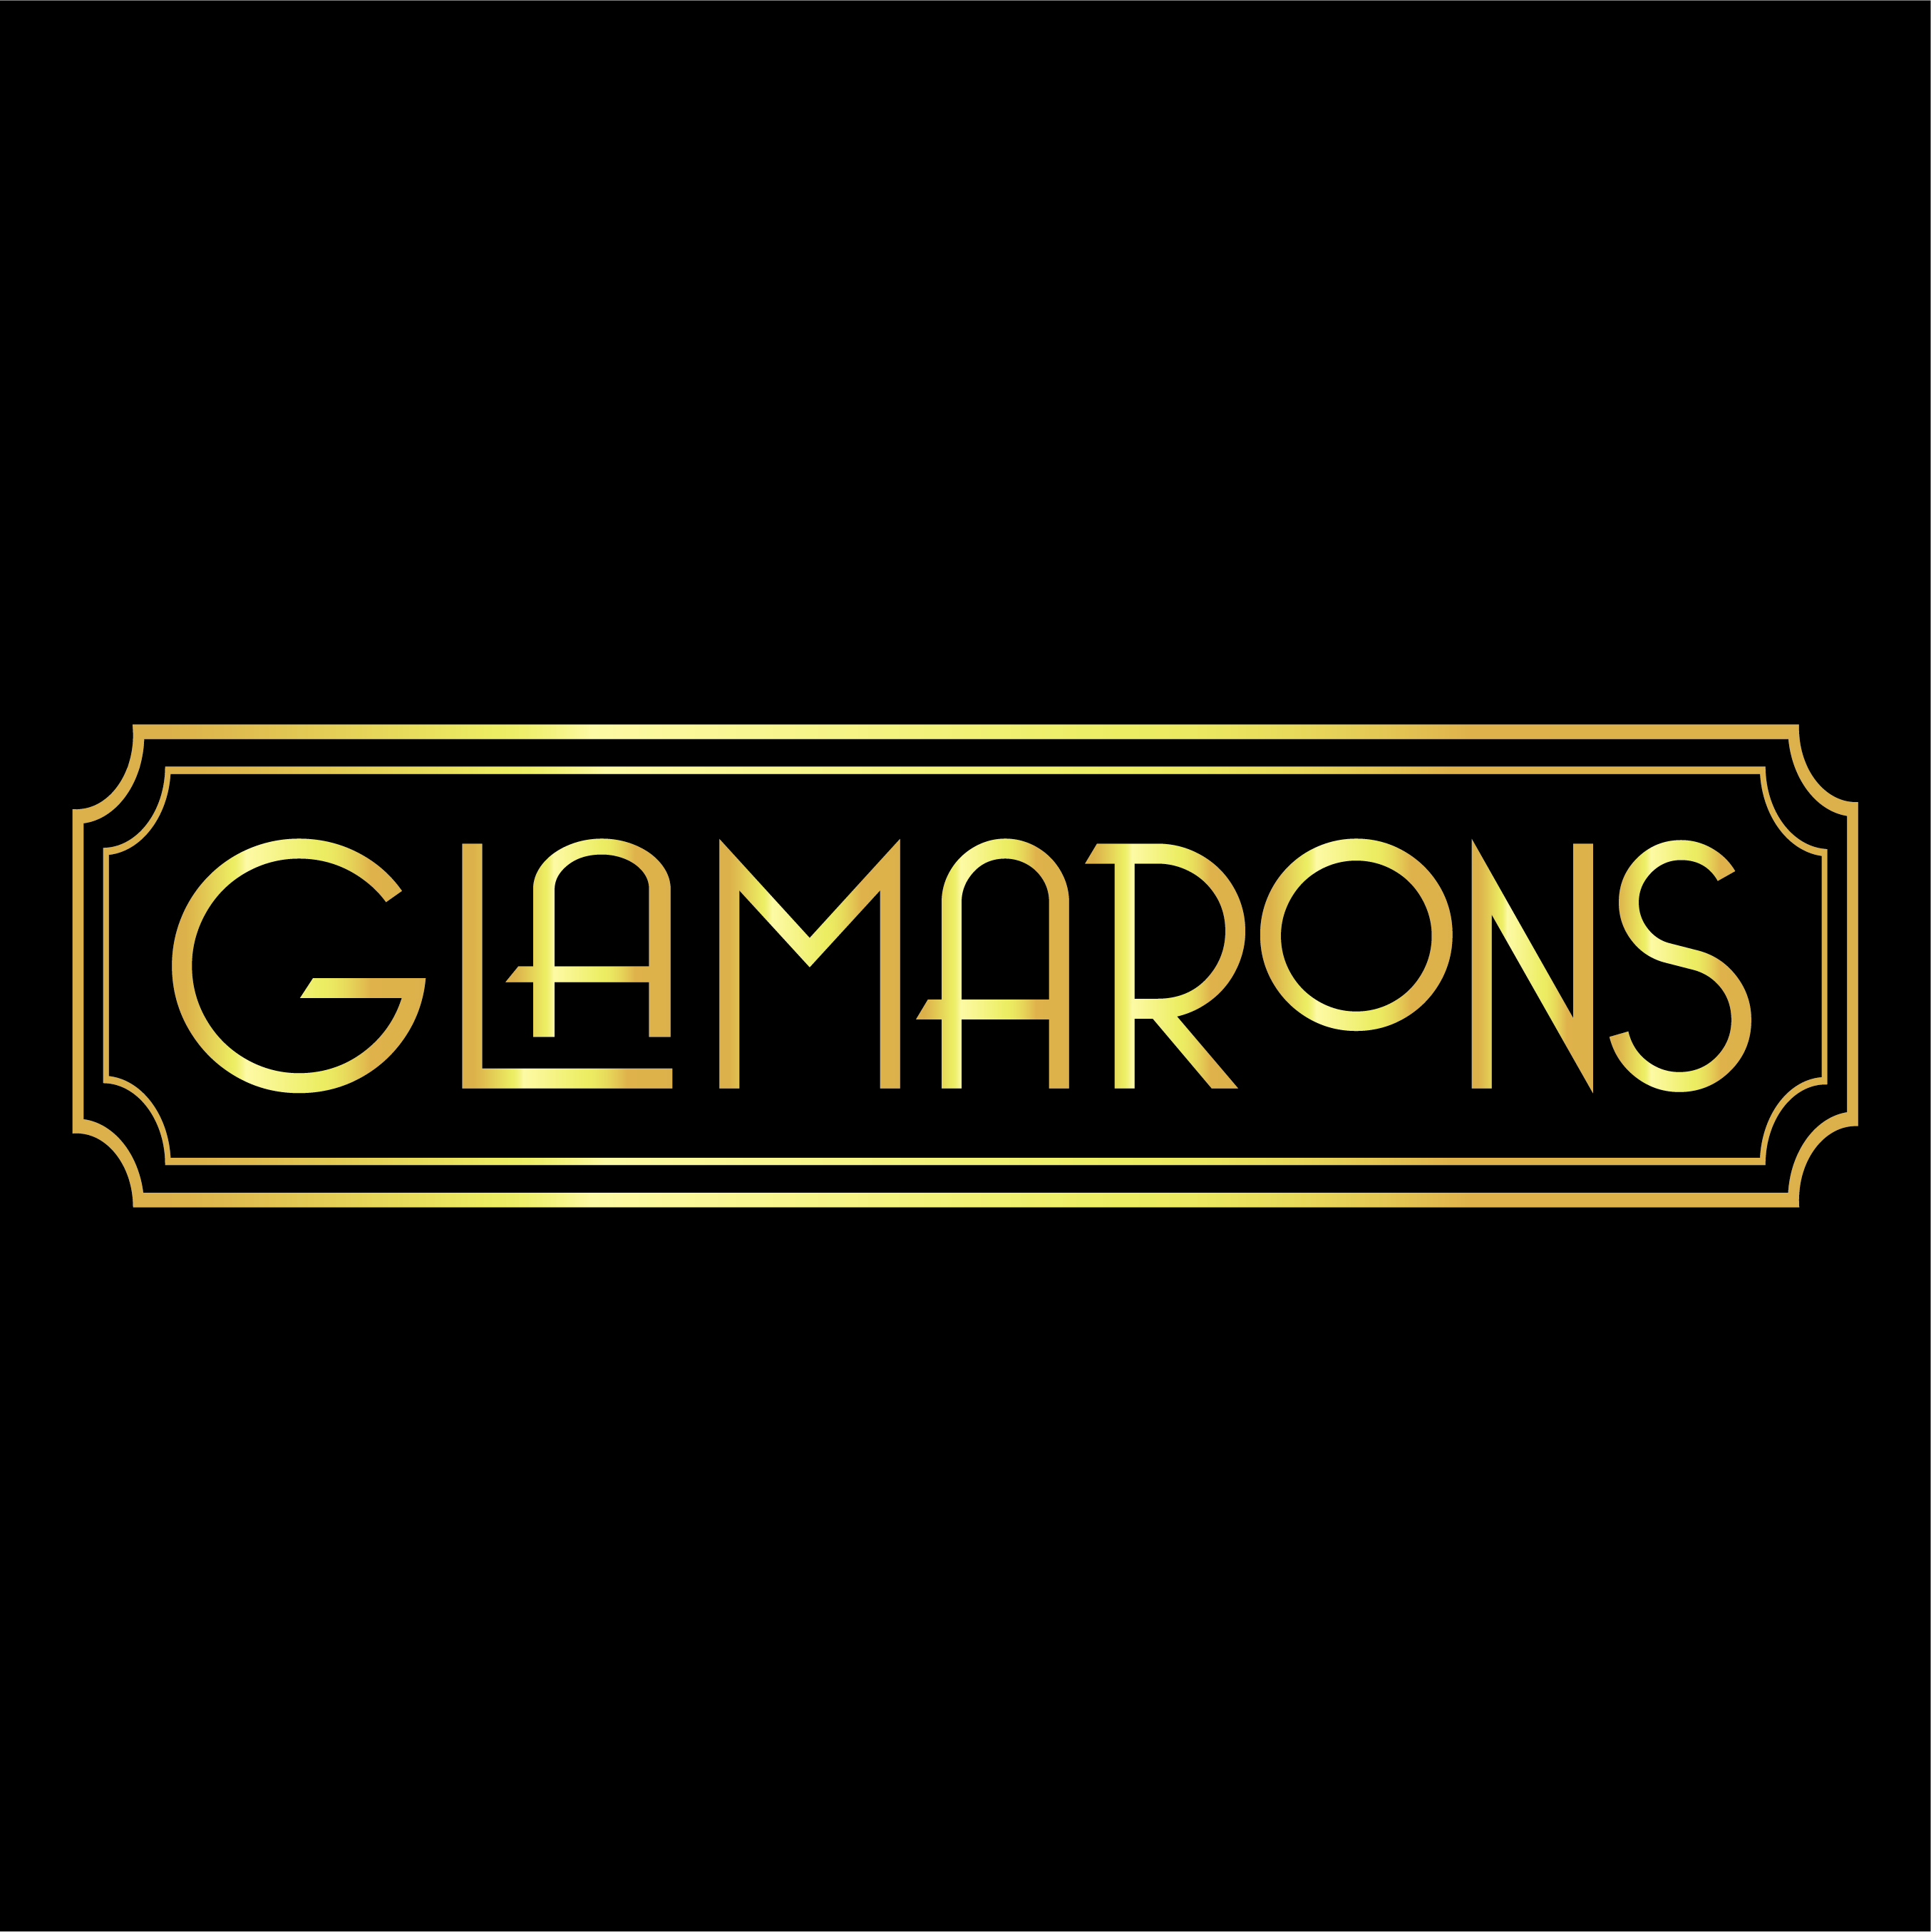 Glamarons